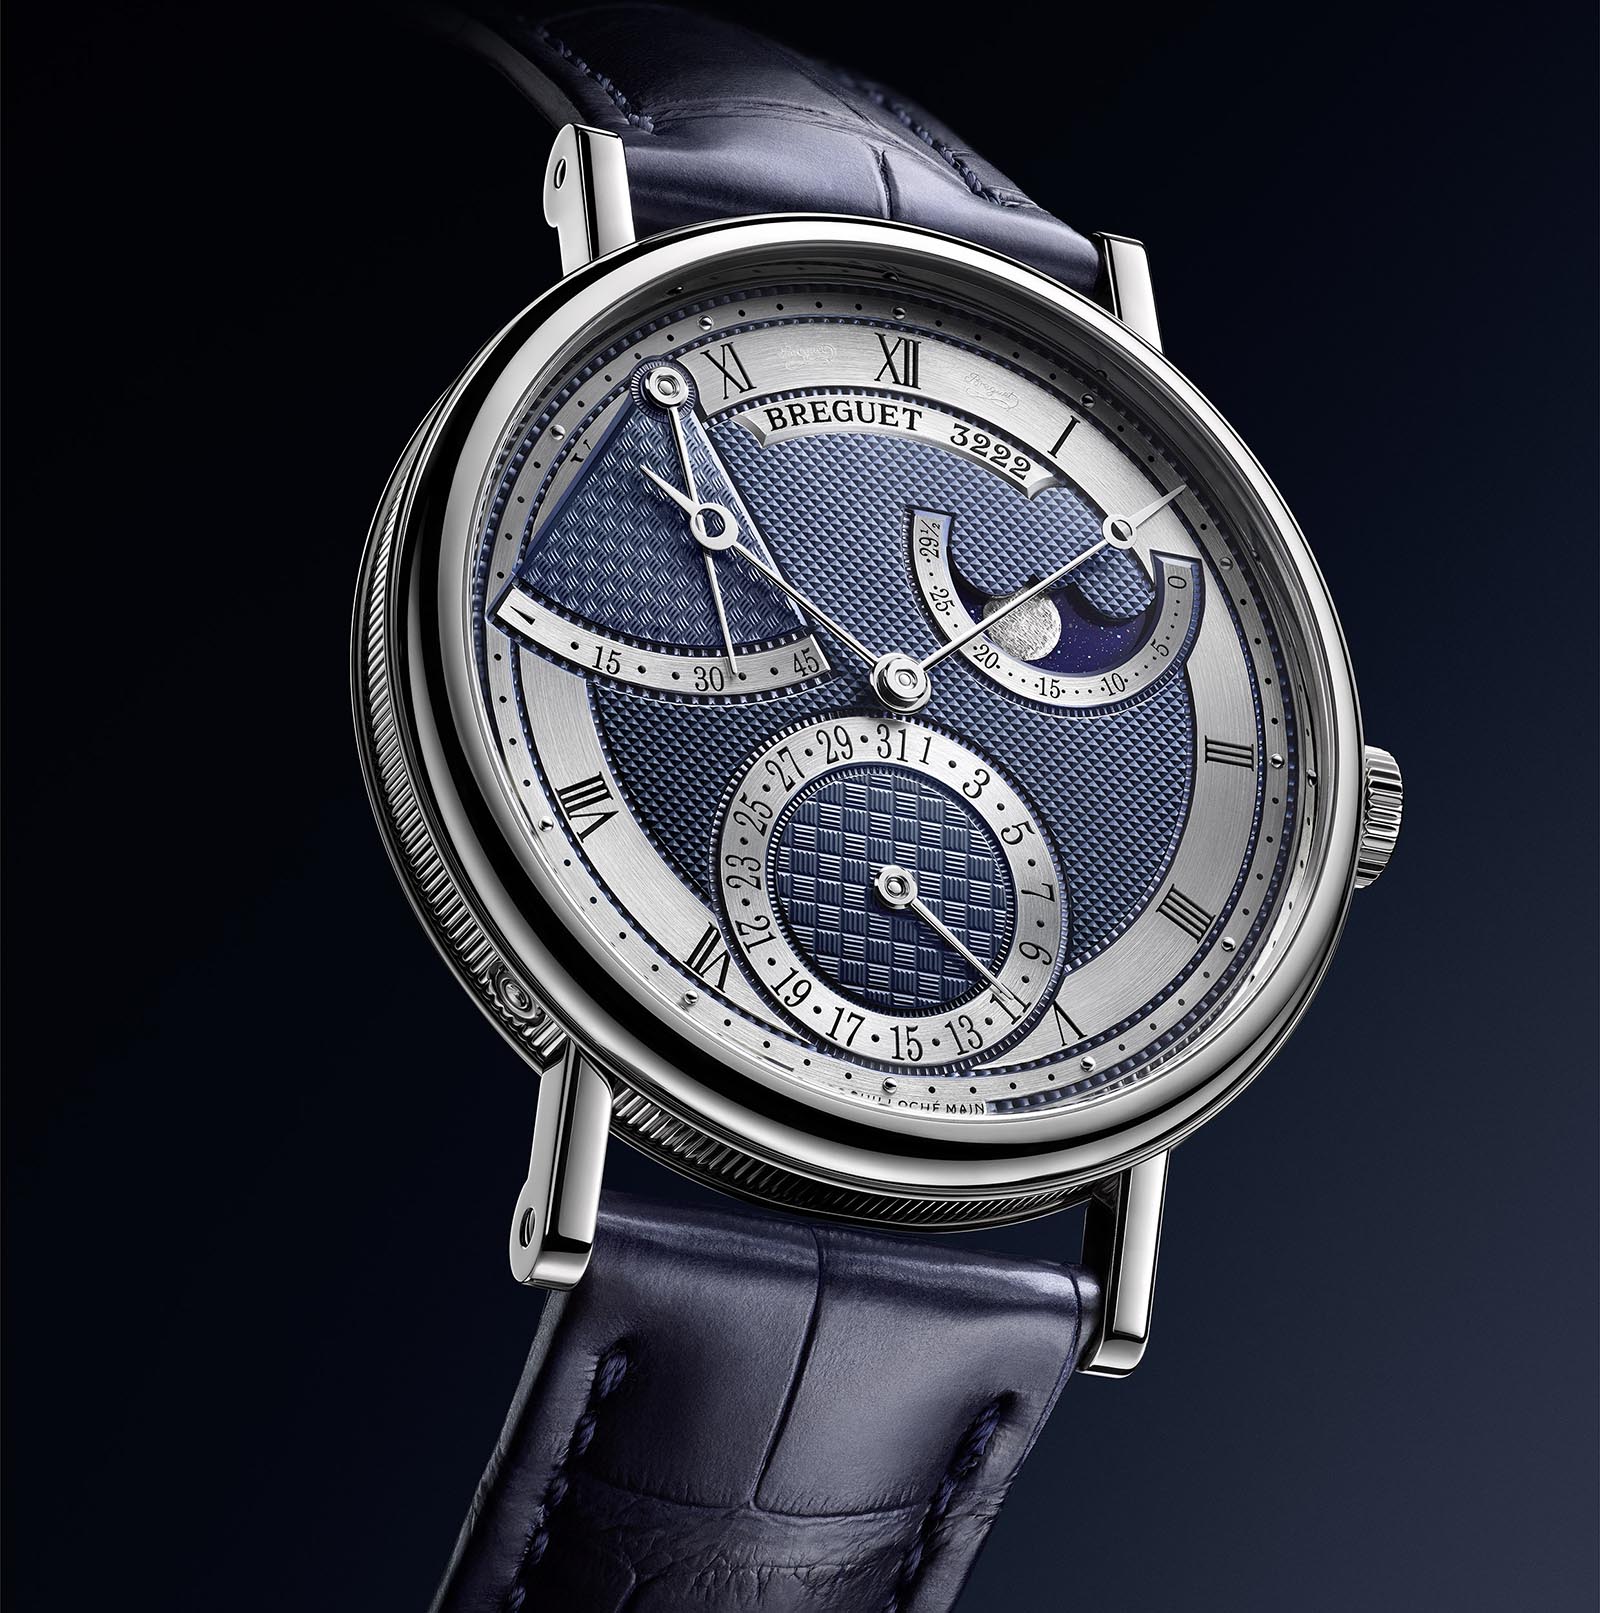 Breguet Introduces the Classique 7137 and Classique 7337 | SJX Watches